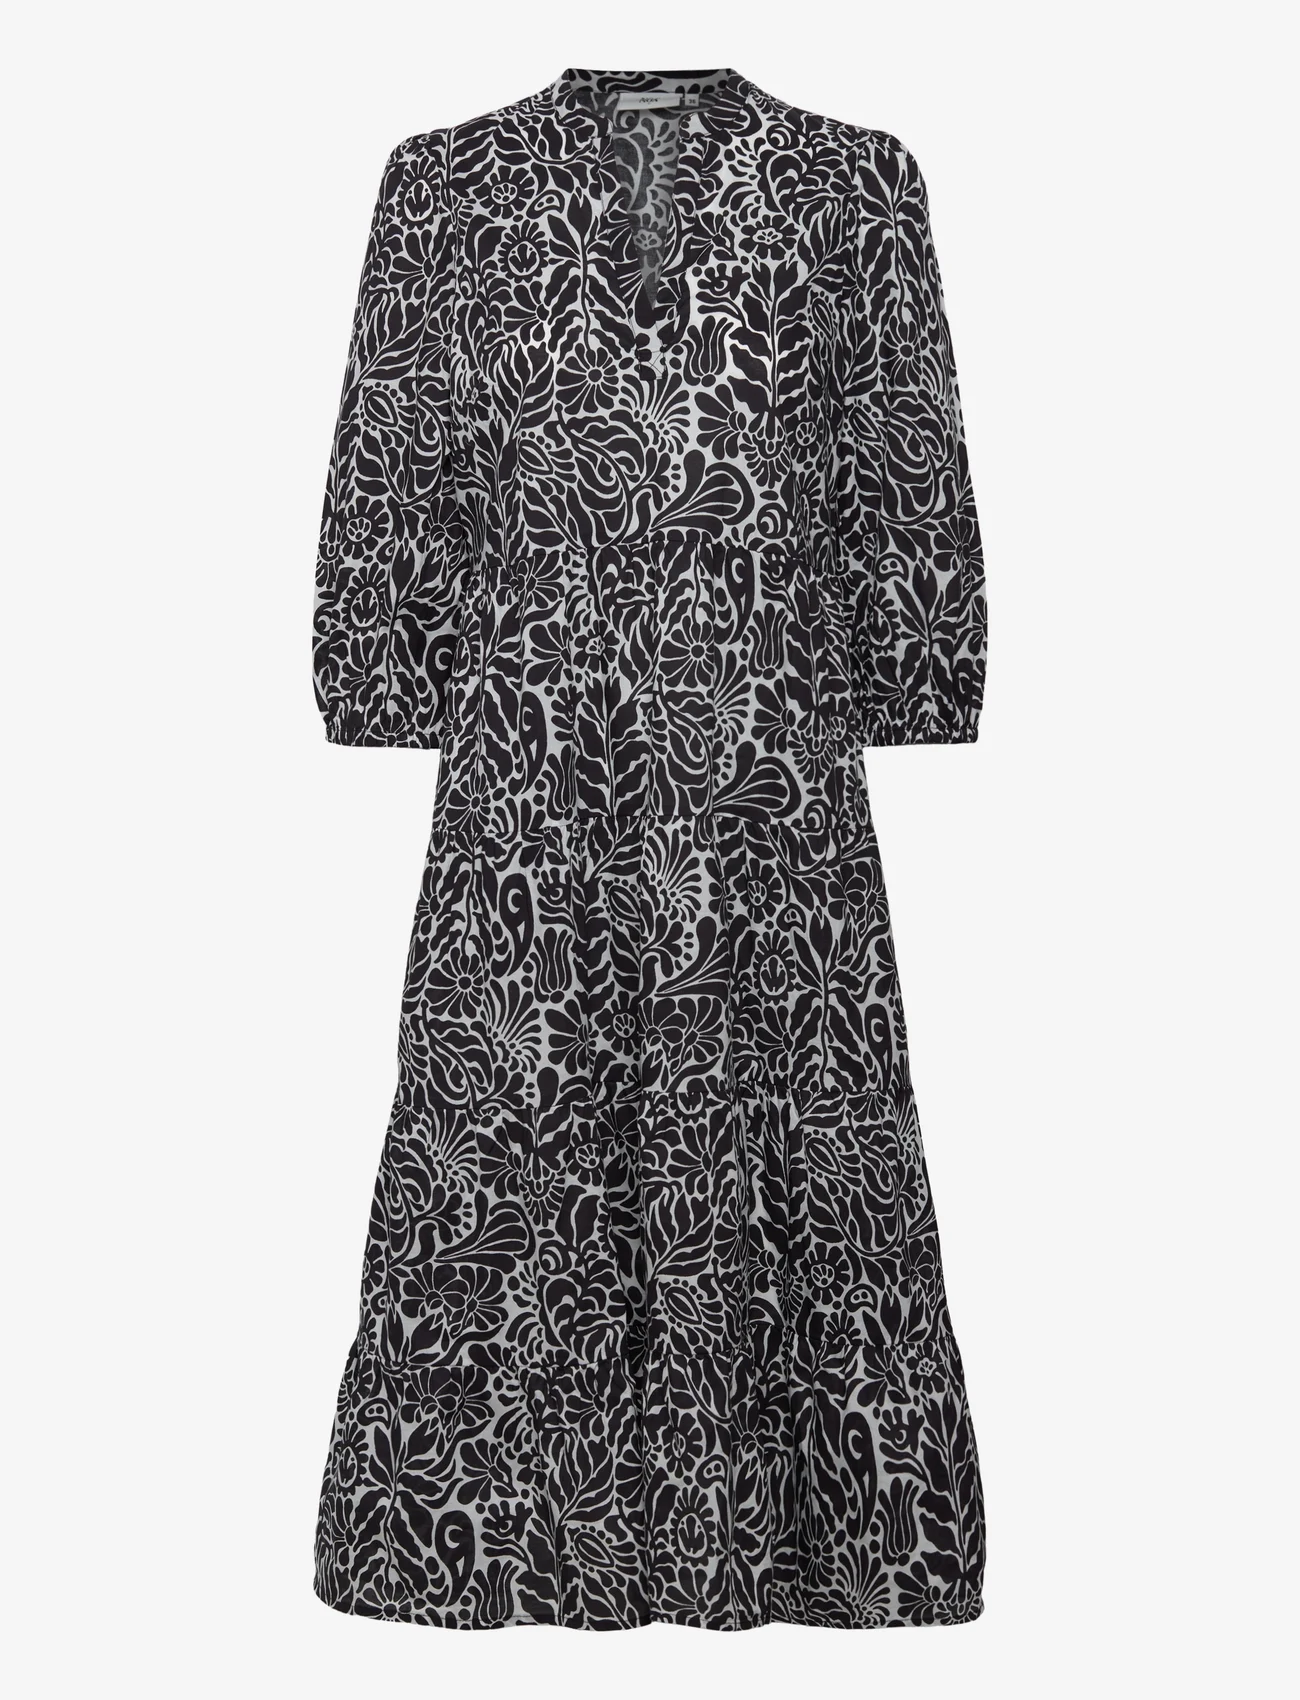 Noa Noa - AnnieNN Dress - skjortklänningar - print black/white - 0